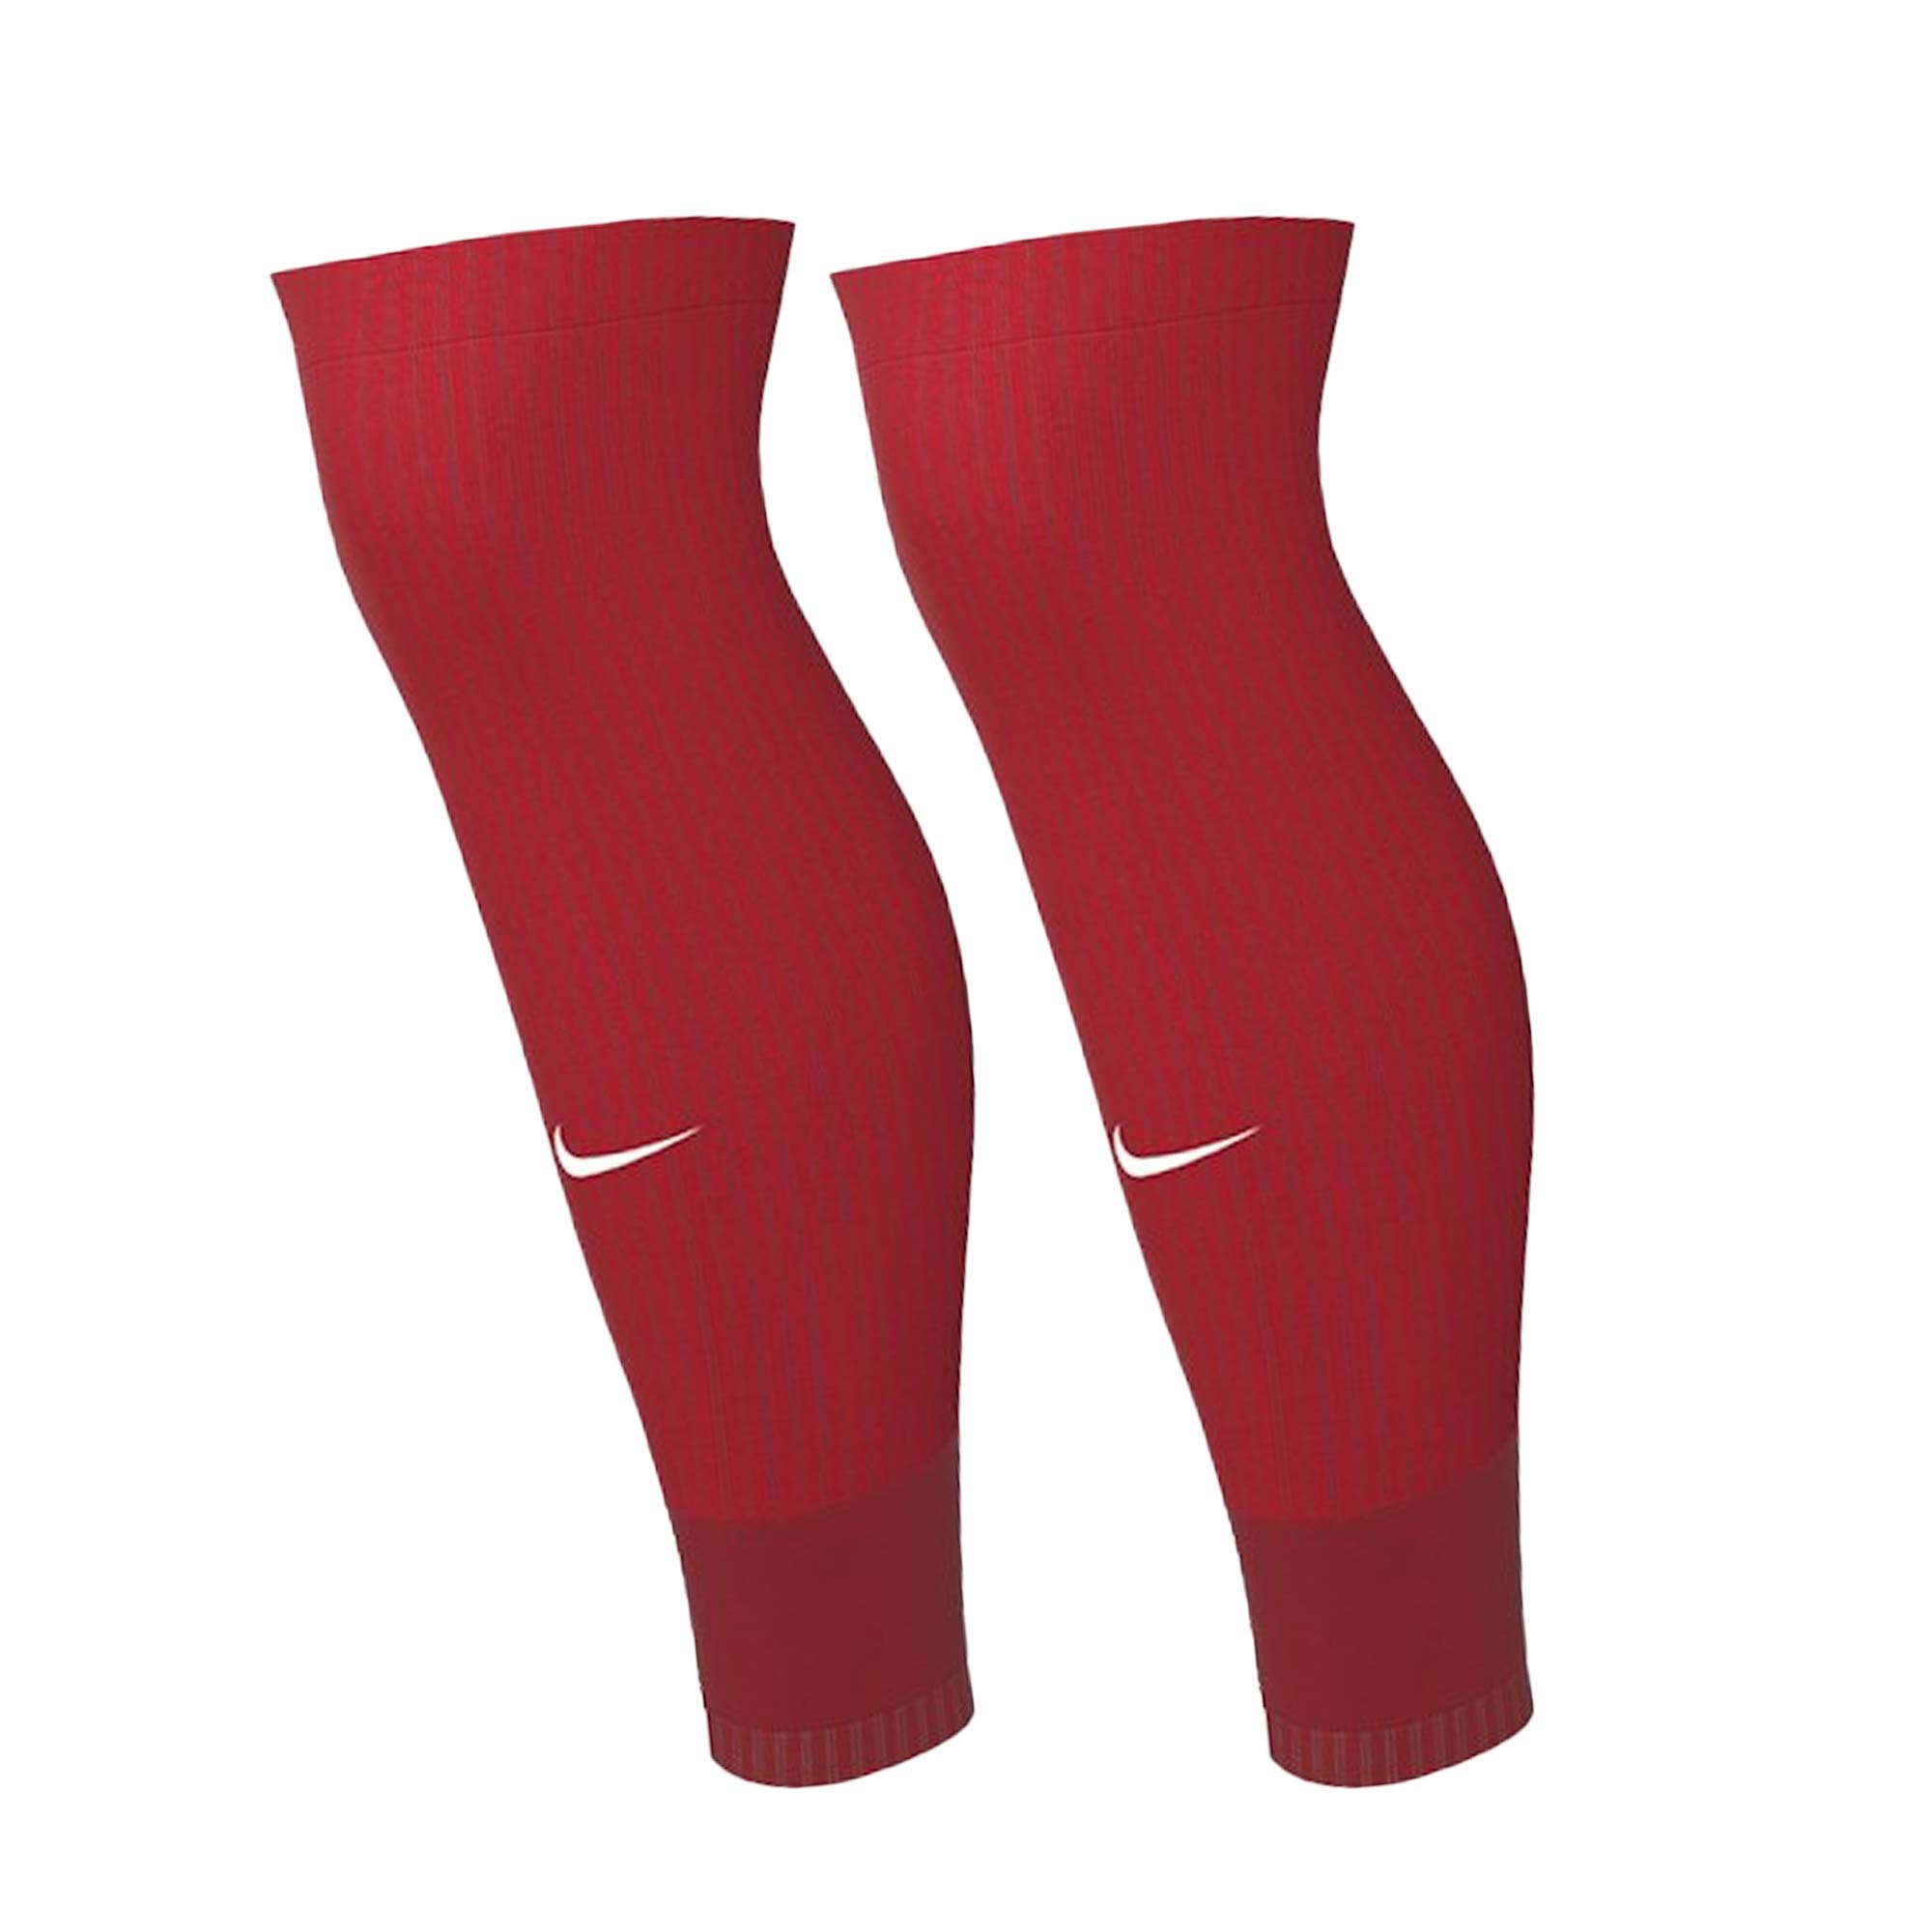 NikeGrip Strike Soccer Cushioned Crew Socks - Black/Anthracite